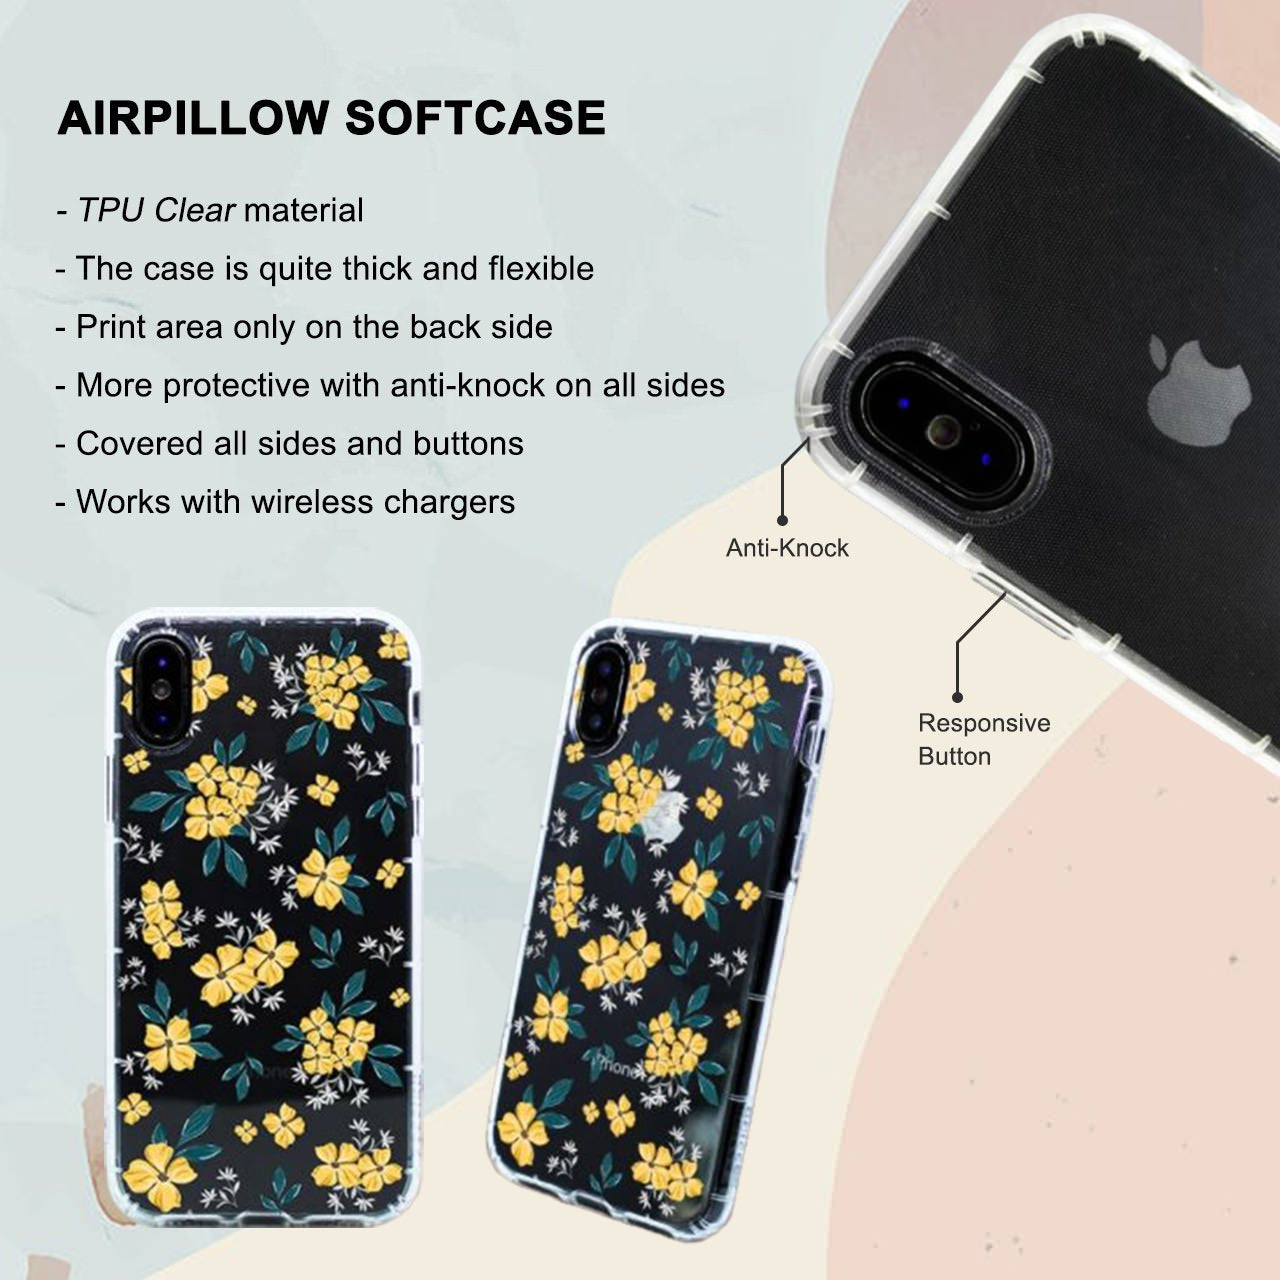 Luffy And Zoro Half Smile iPhone 11 Pro Case